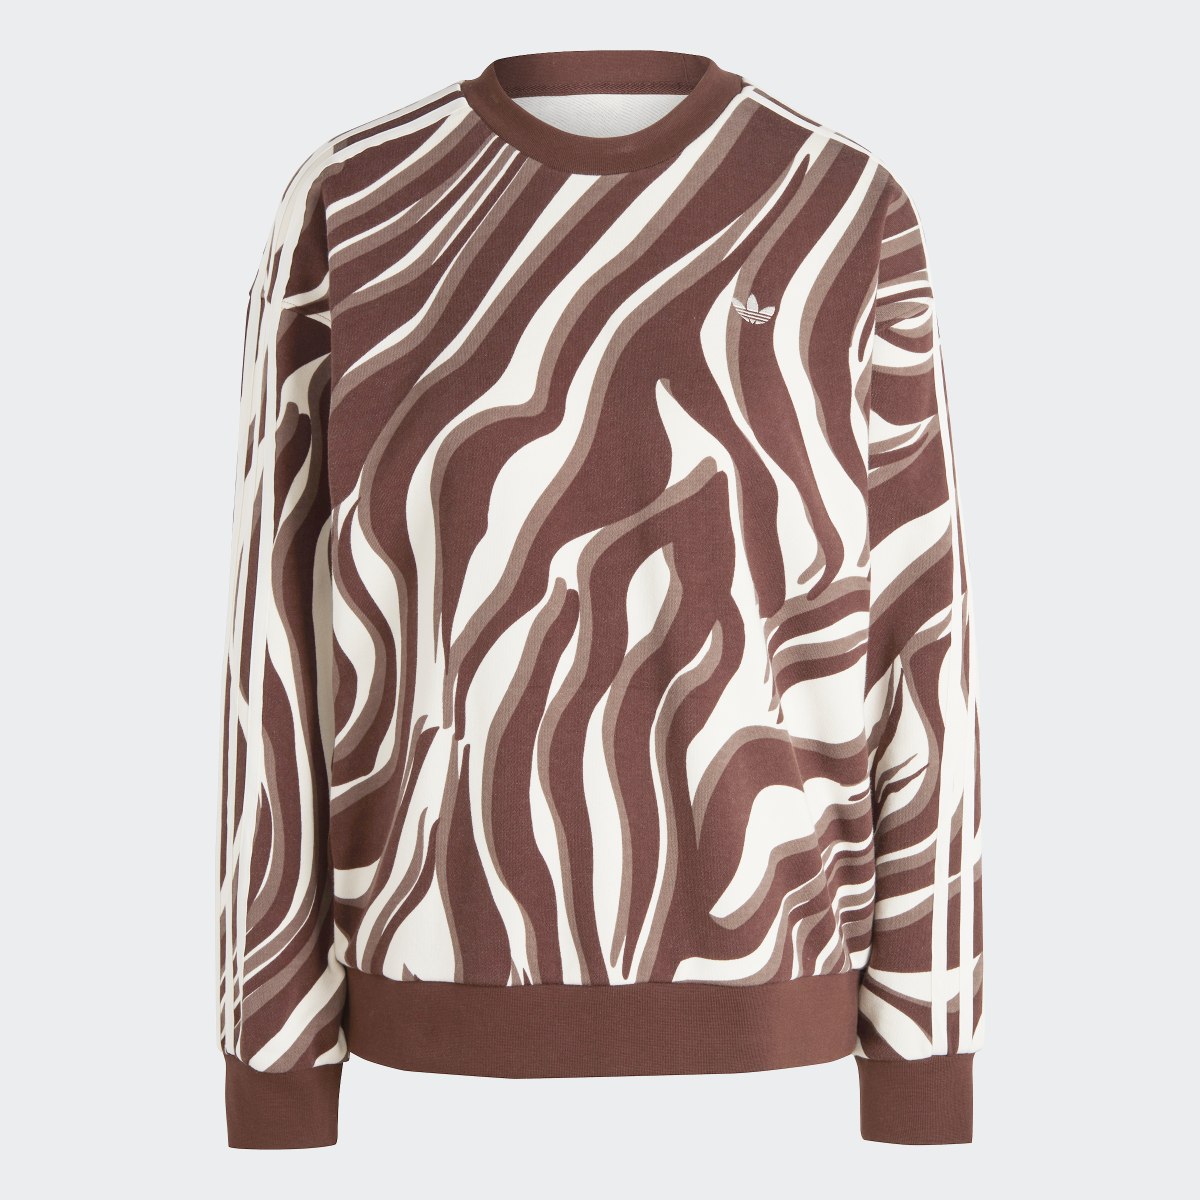 Adidas Abstract Allover Animal Print Sweatshirt. 5